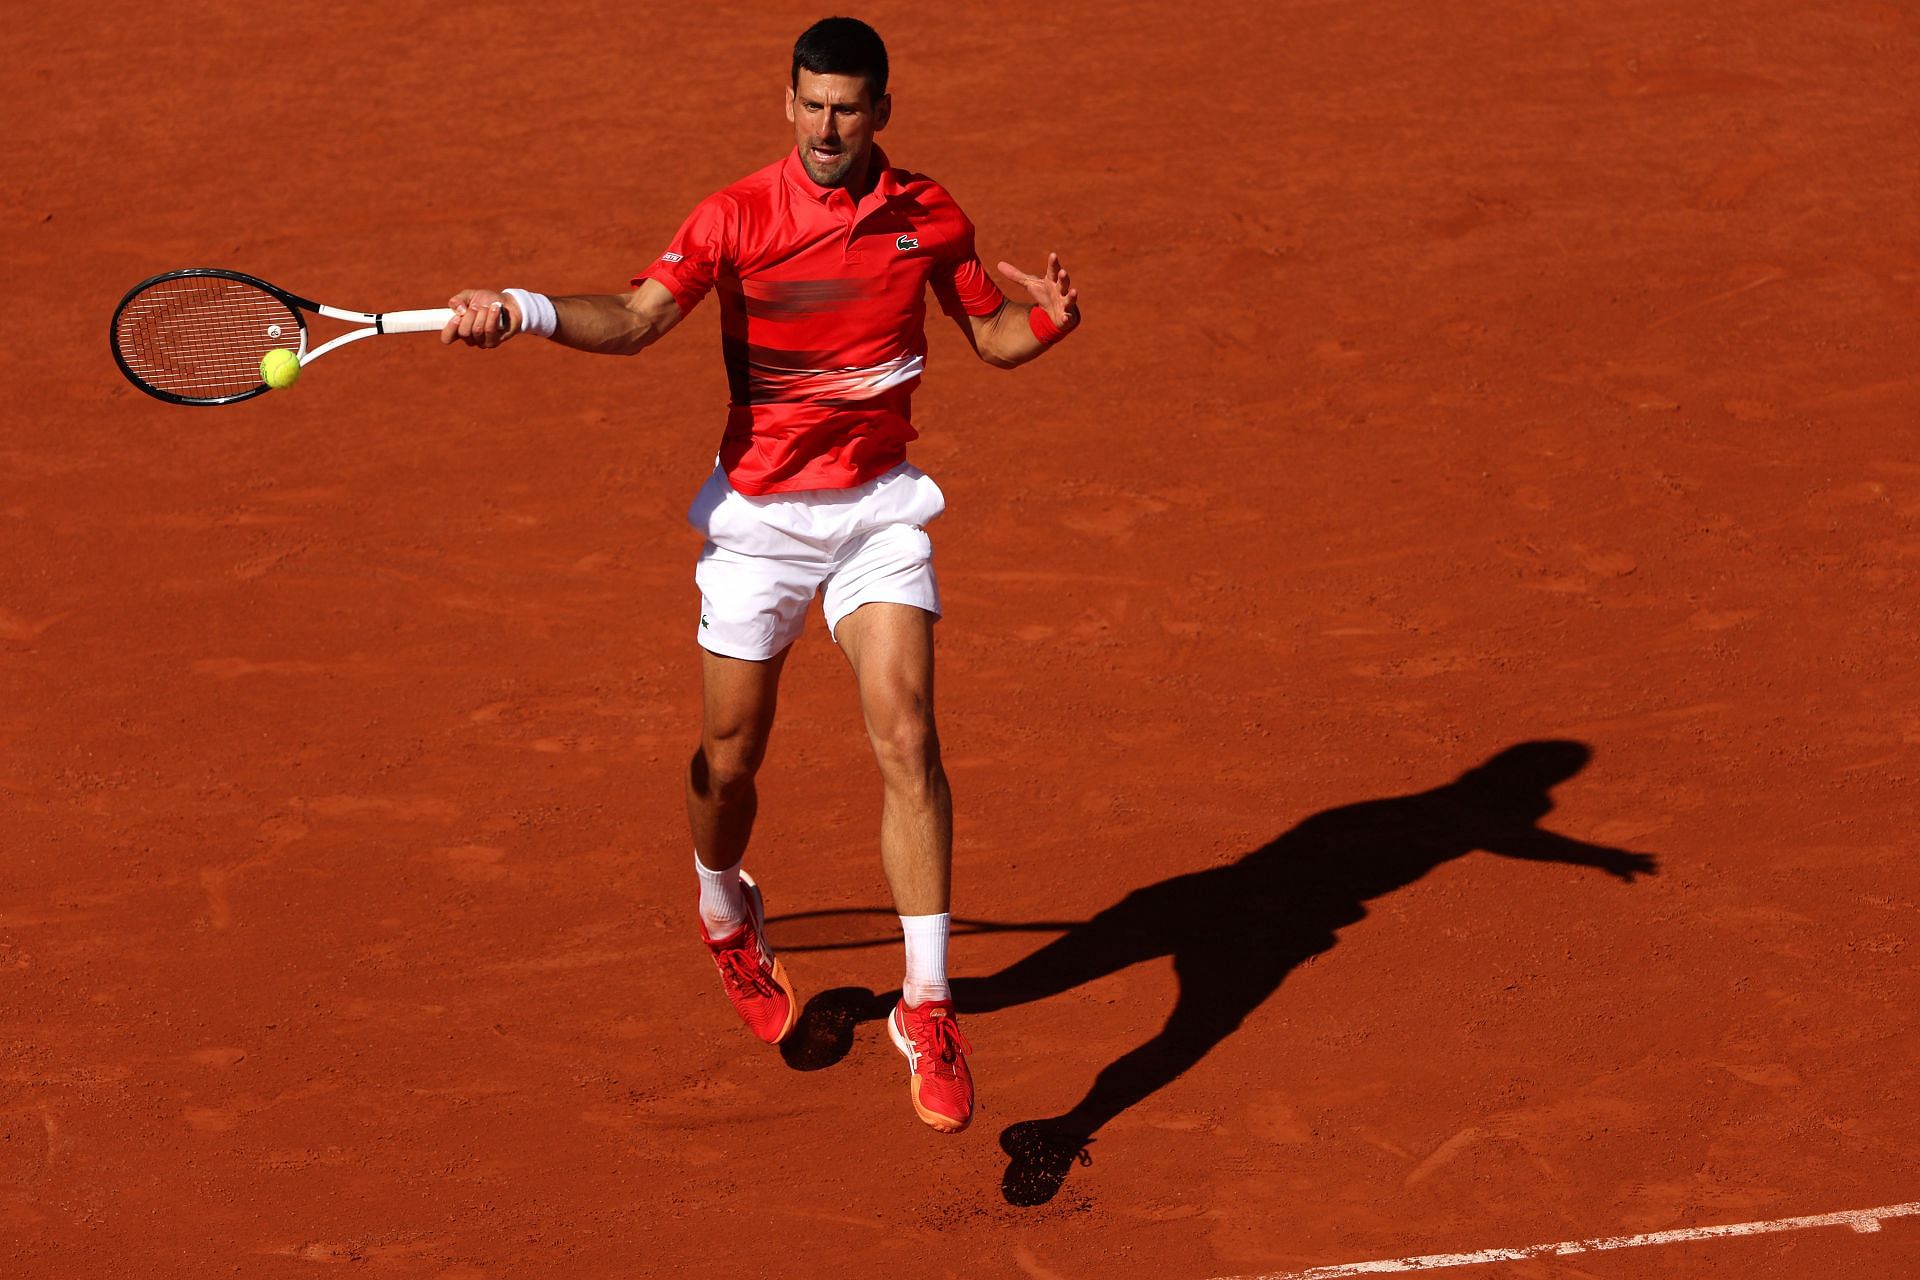 Novak Djokovic takes on Diego Schwartzman in the fourth round of the French Open